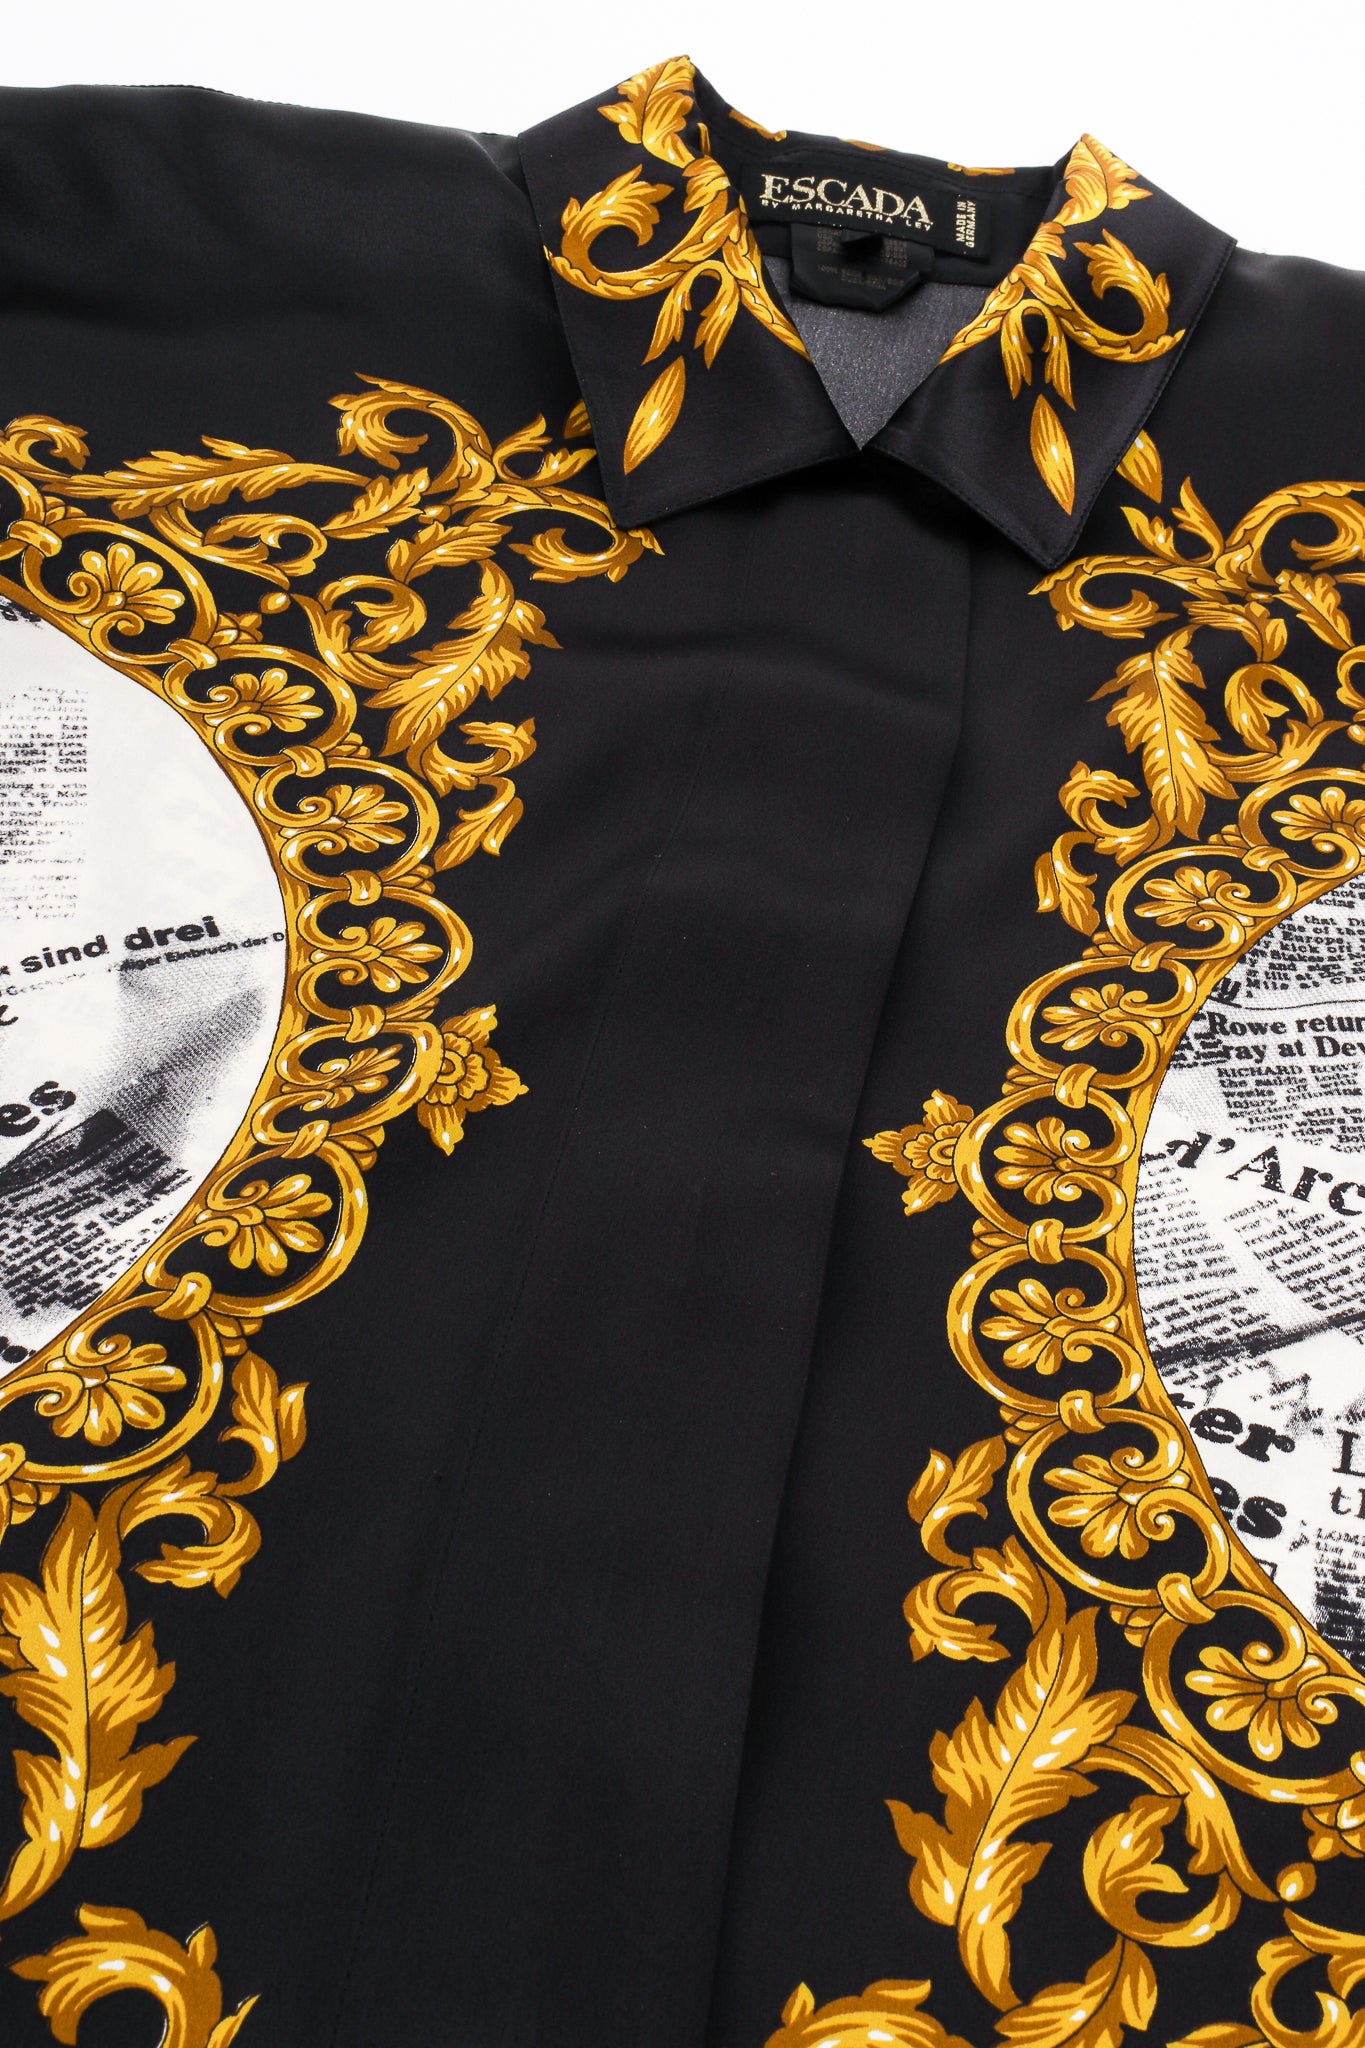 Vintage Escada Baroque Newspaper Print Shirt Galliano Inspired flat at Recess LA